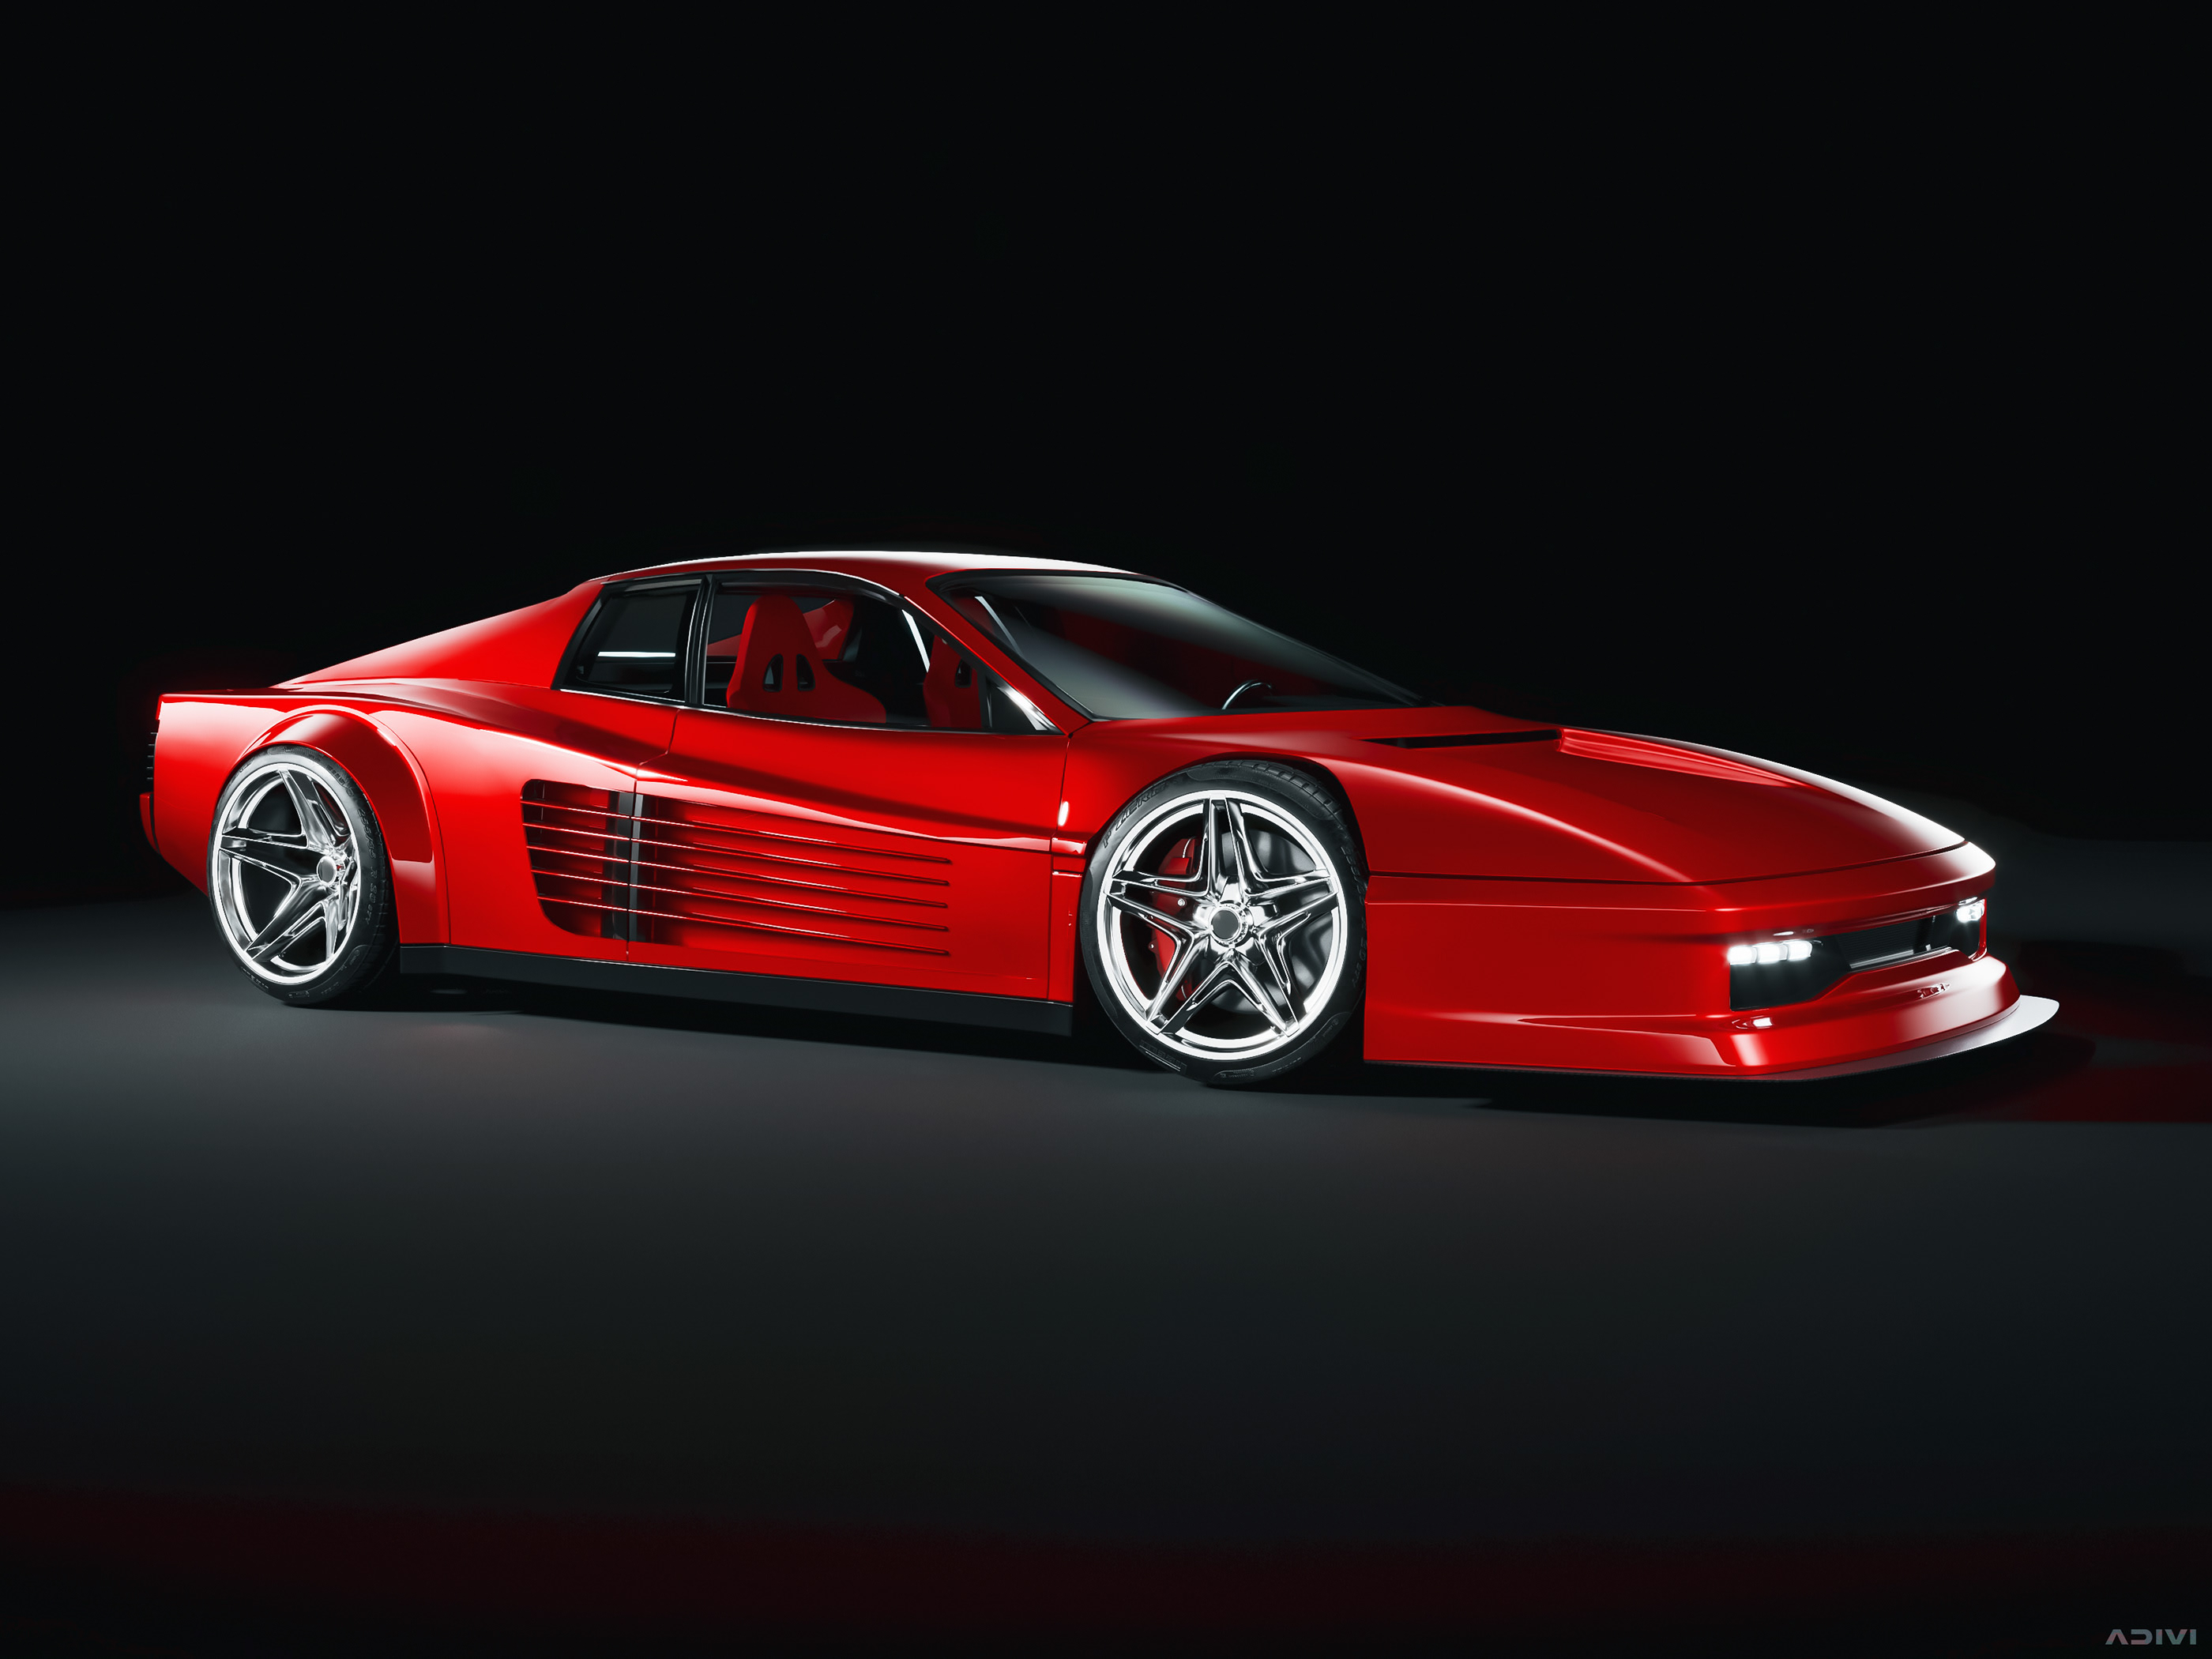 Ferrari testarossa красного цвета на черном фоне